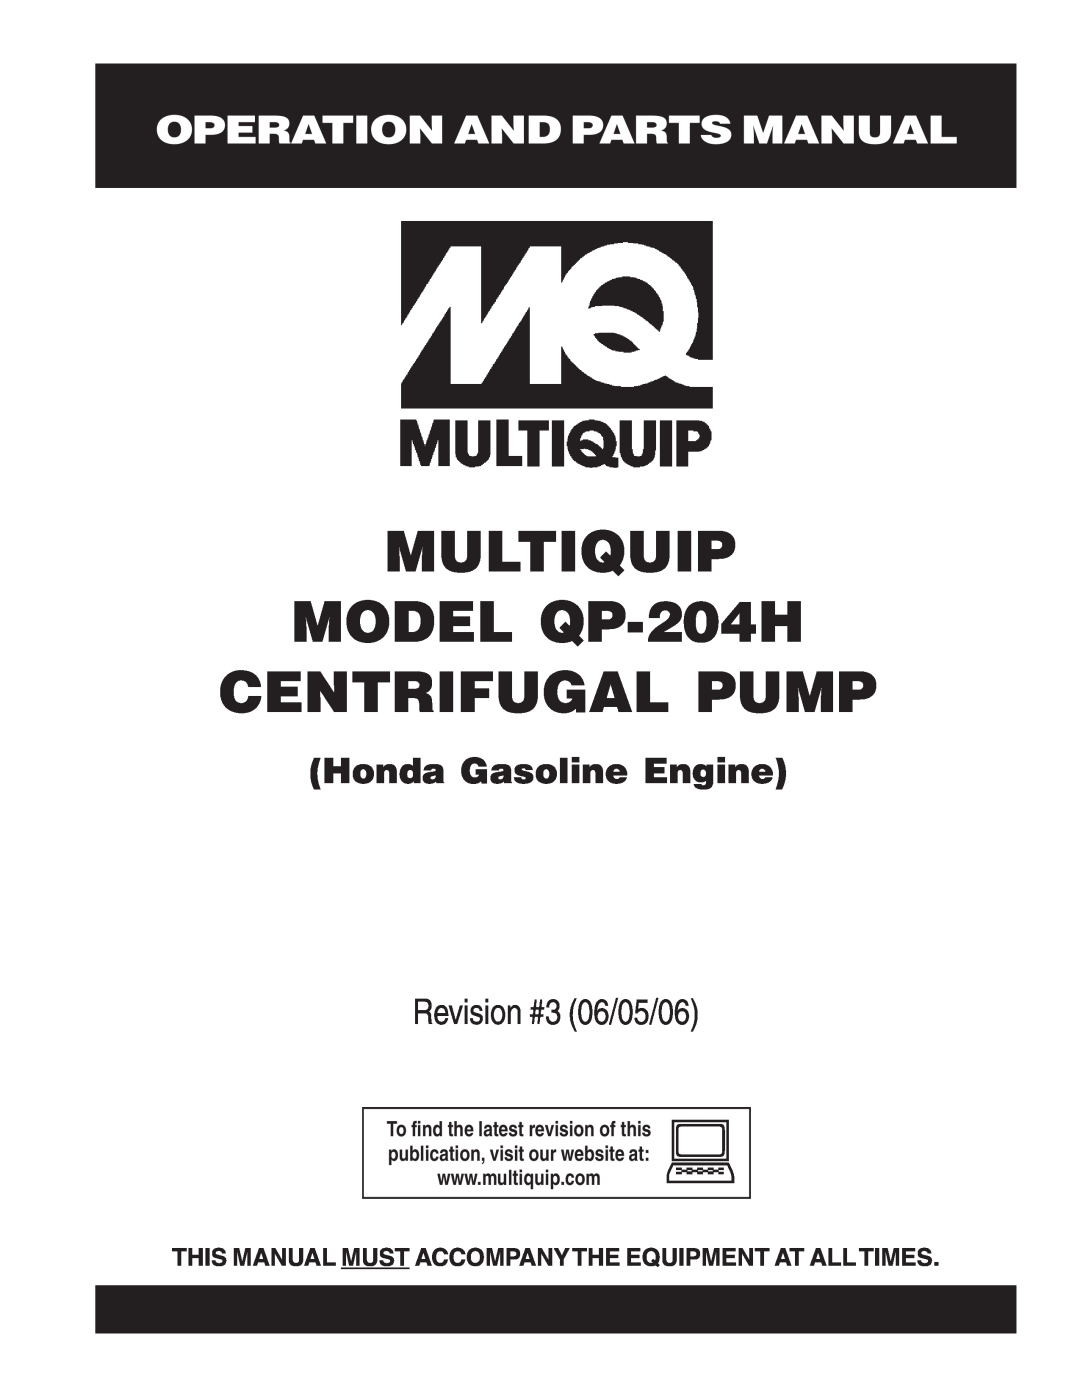 Multiquip manual Operation And Parts Manual, MULTIQUIP MODEL QP-204H CENTRIFUGAL PUMP, Honda Gasoline Engine 